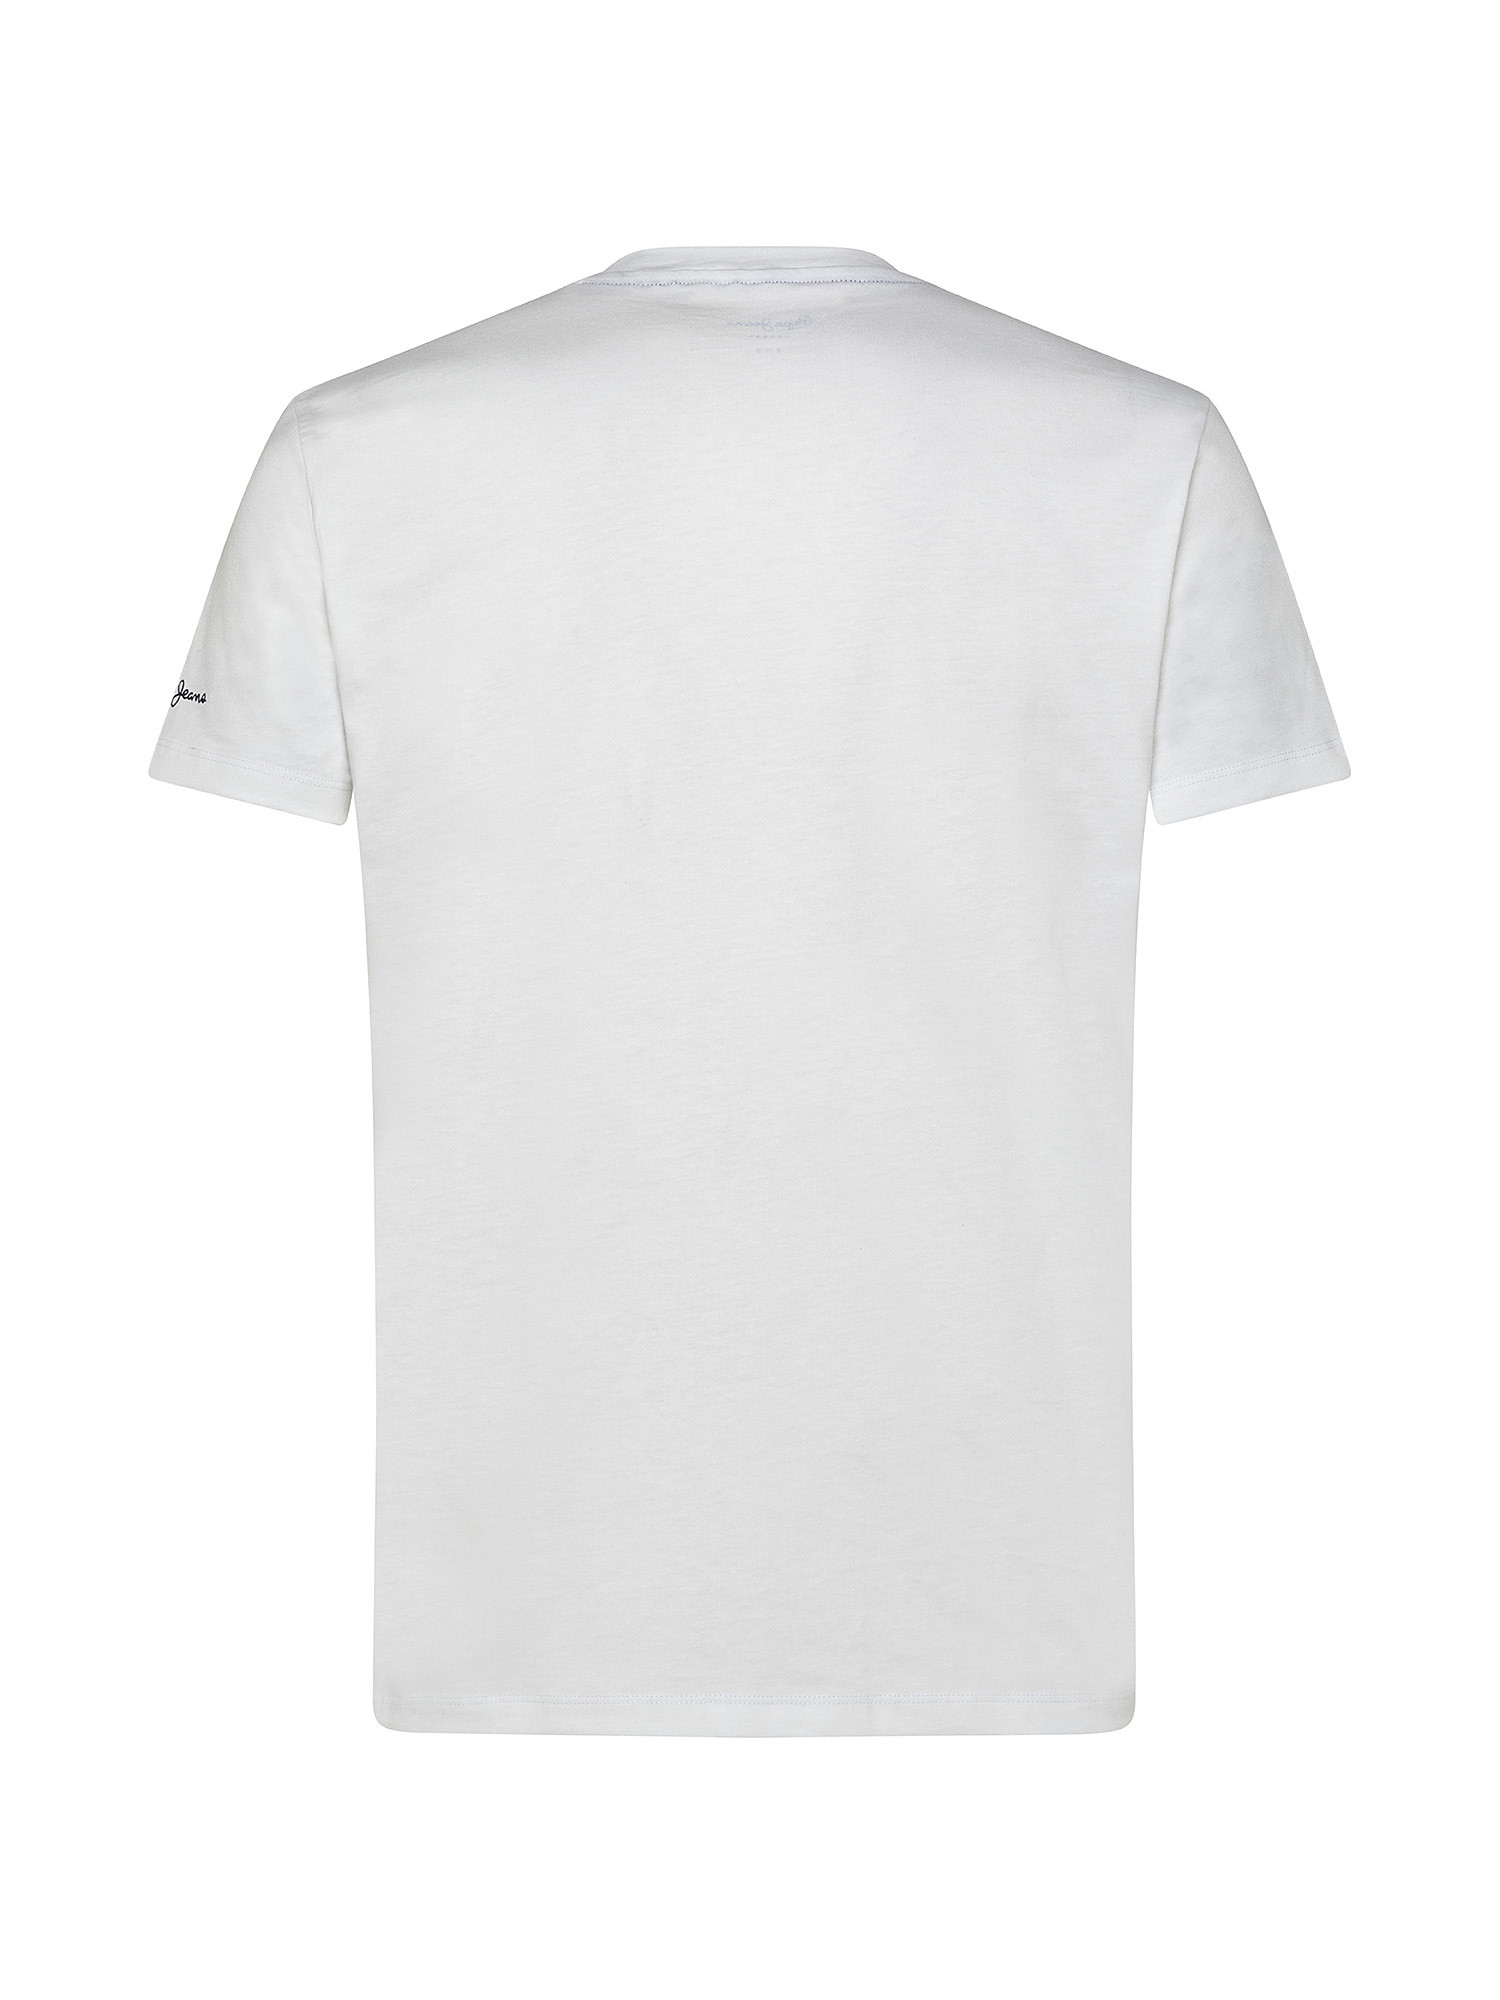 Totem cotton T-shirt, White, large image number 1